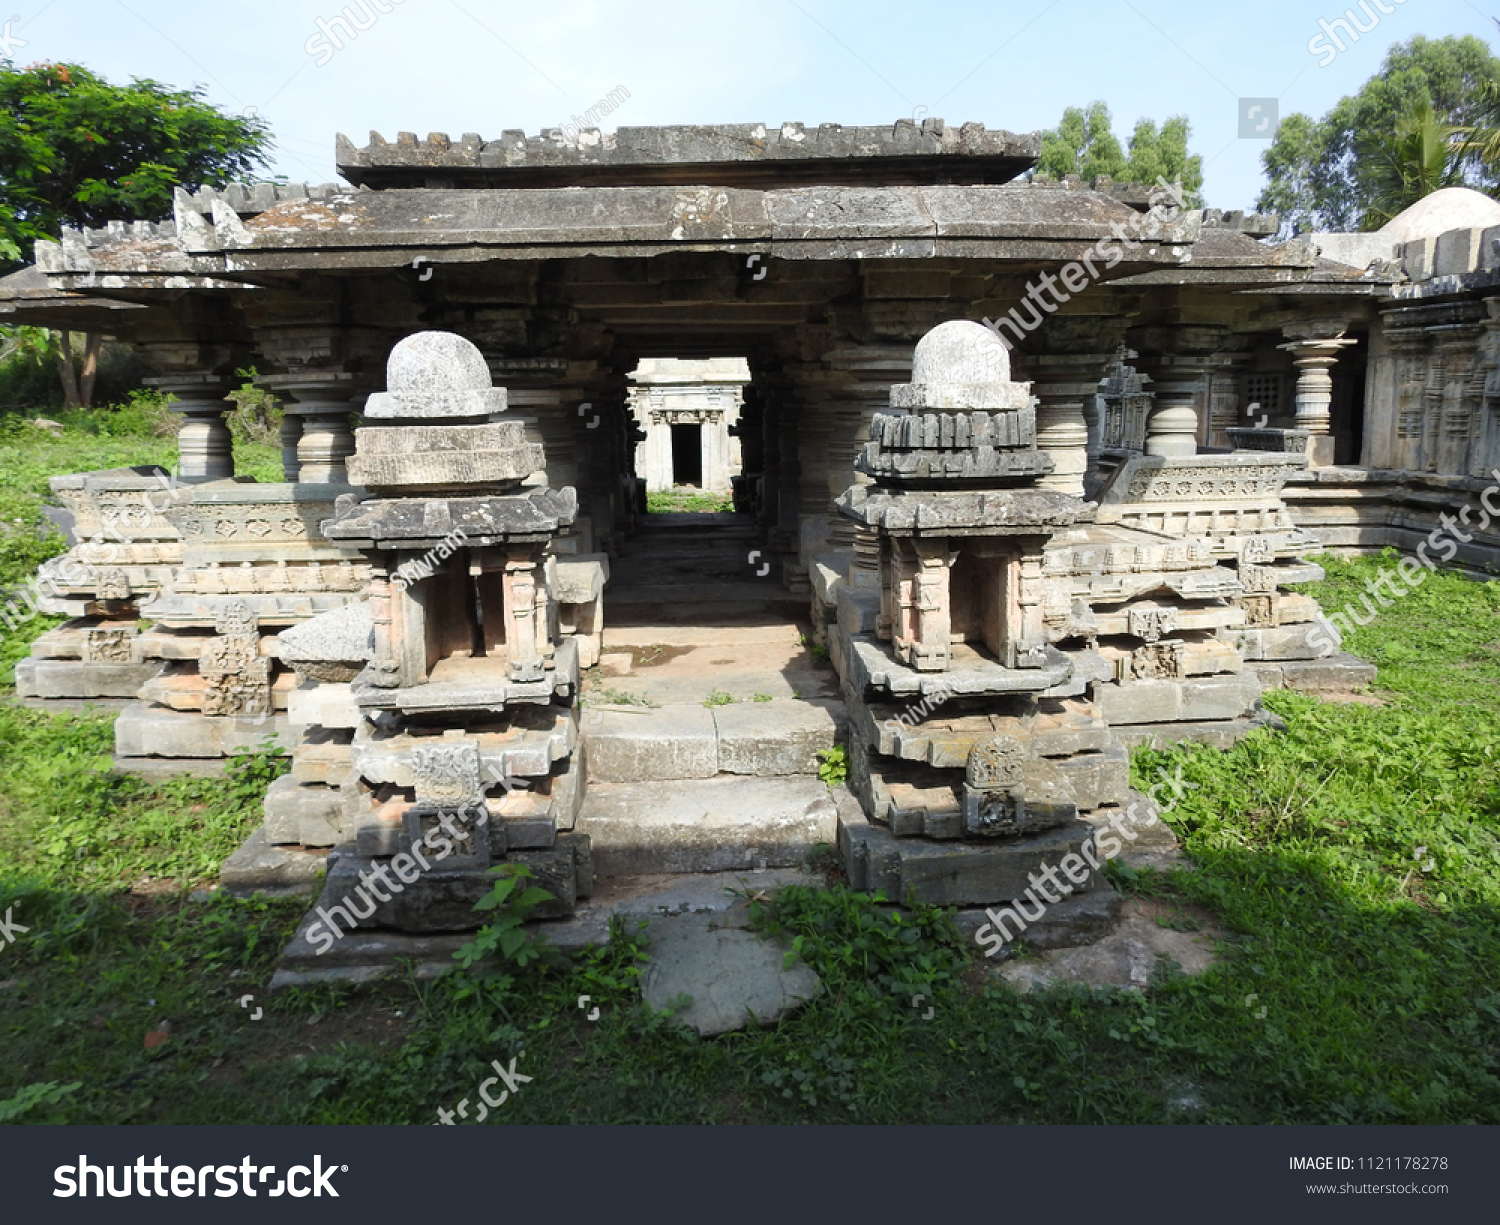 Temple ruins near Bucesvara Temple, Koravangala, Hassan District of Karnataka state, India. The temple was built in 1173 A.D. #1121178278